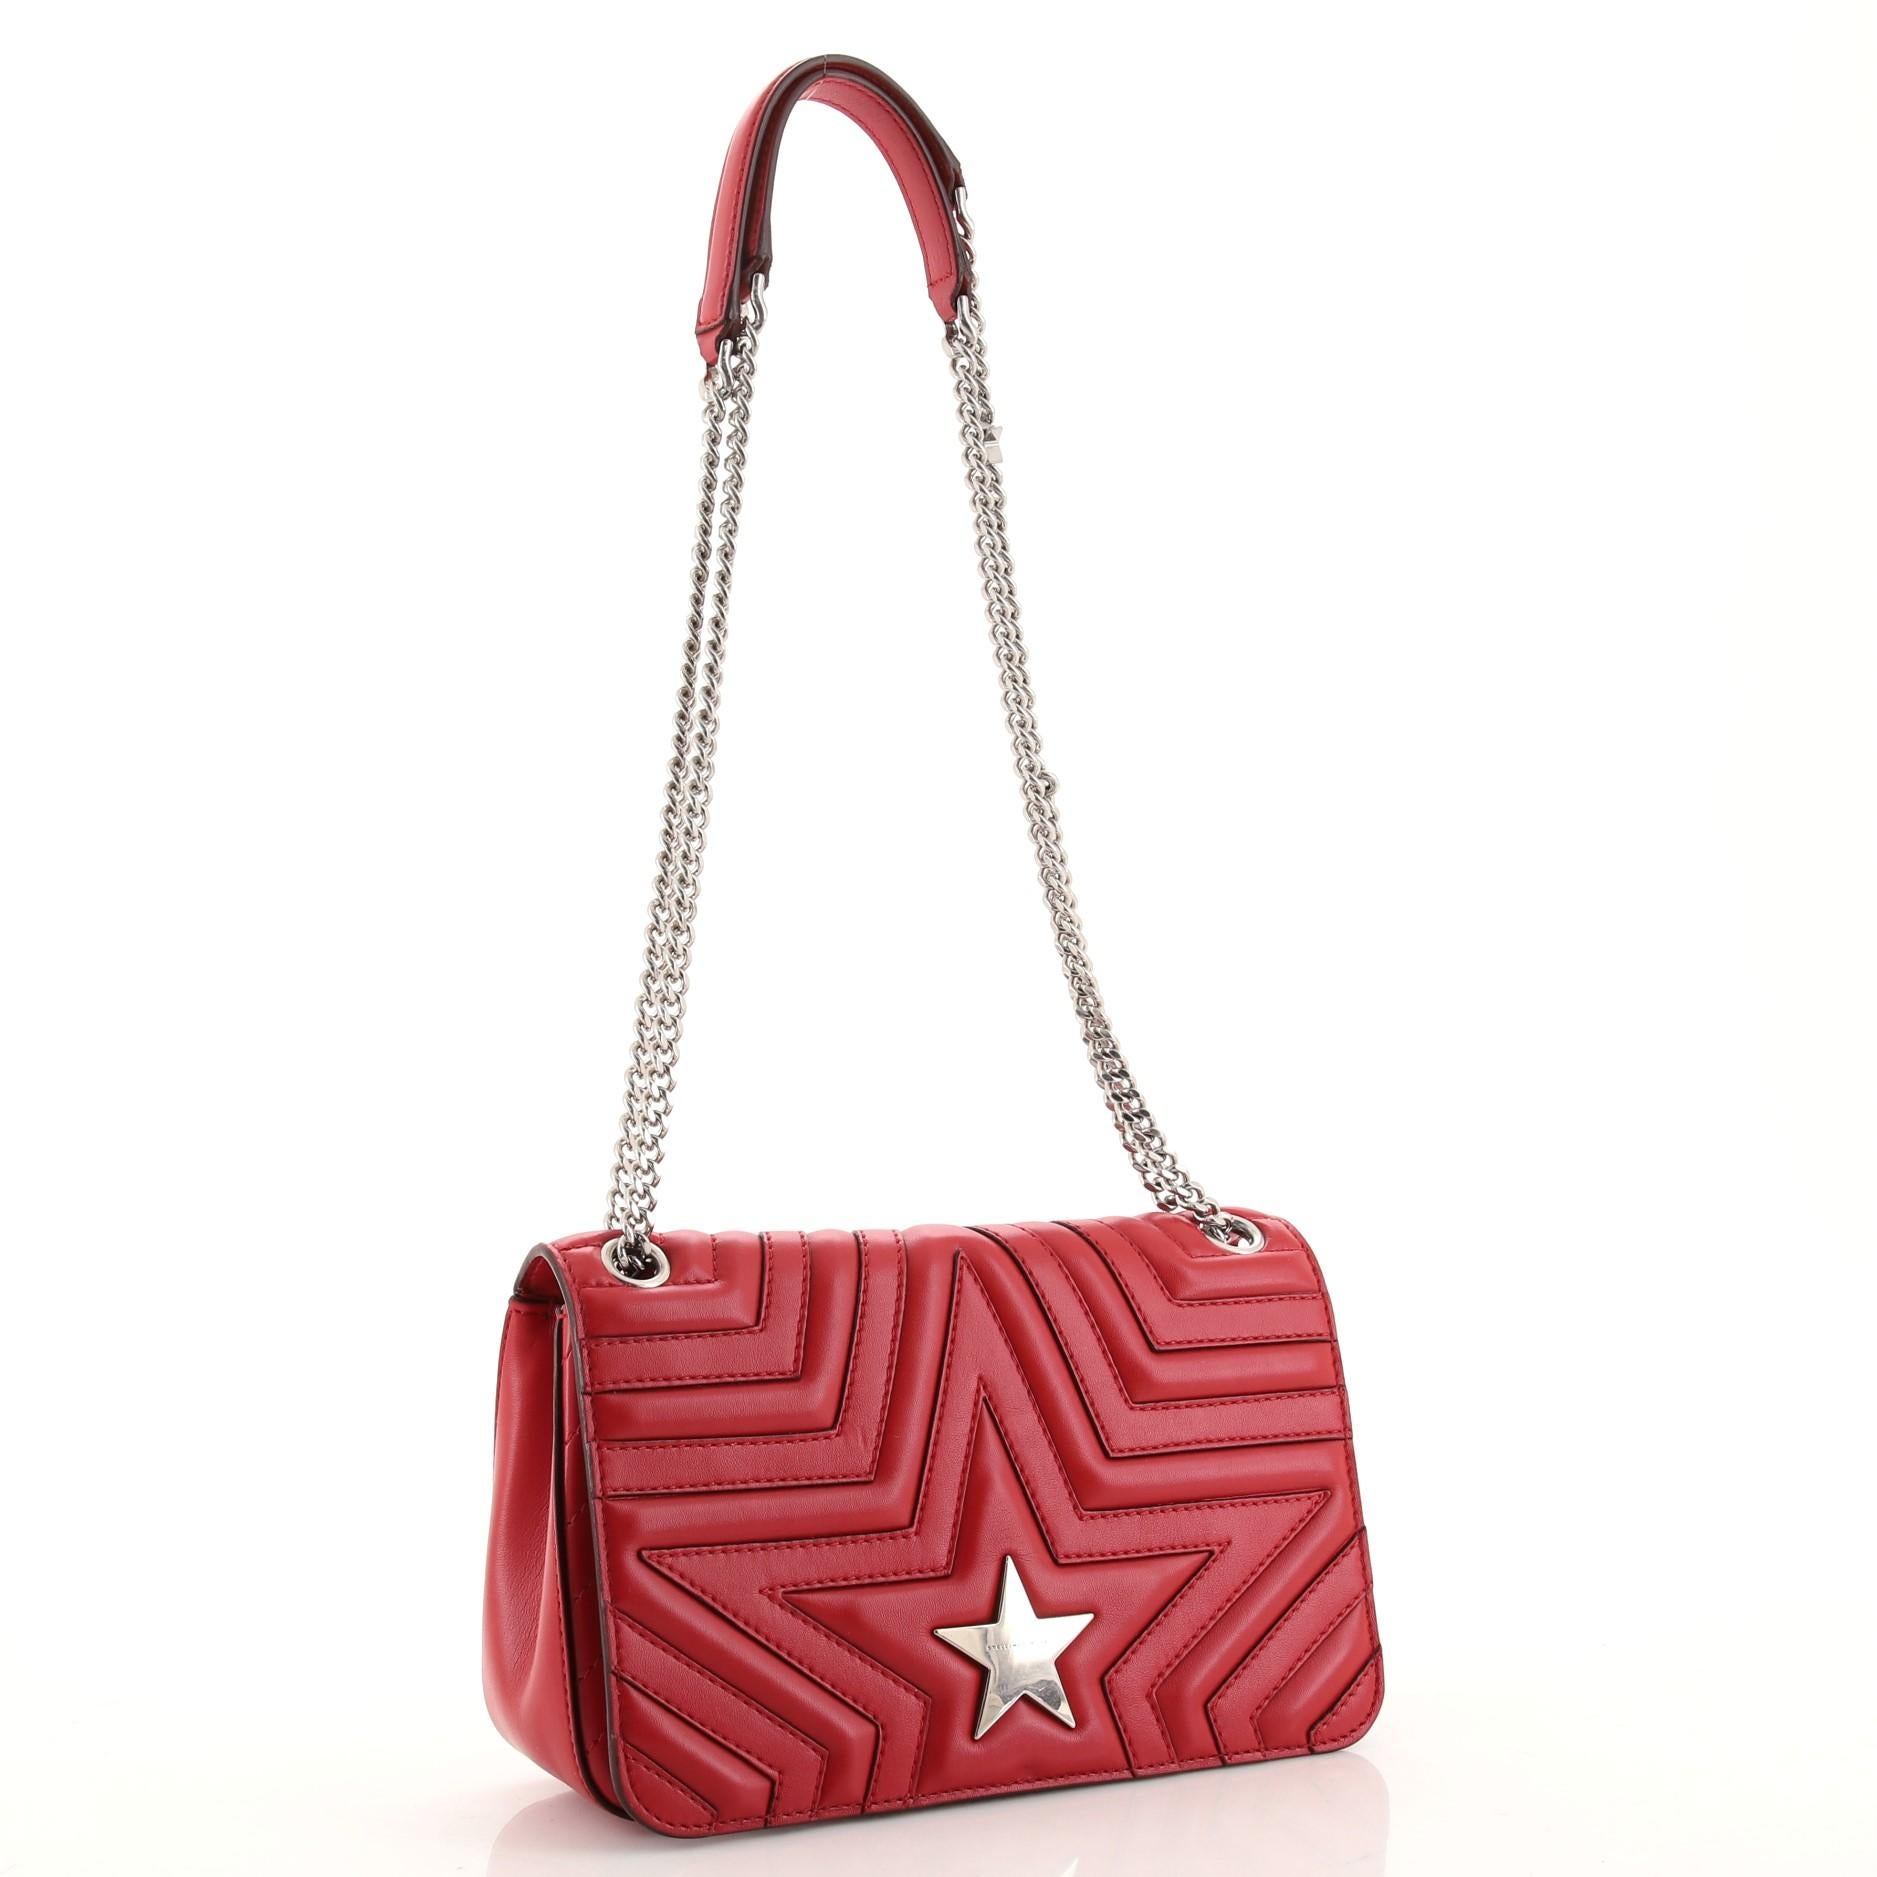 stella mccartney red bag